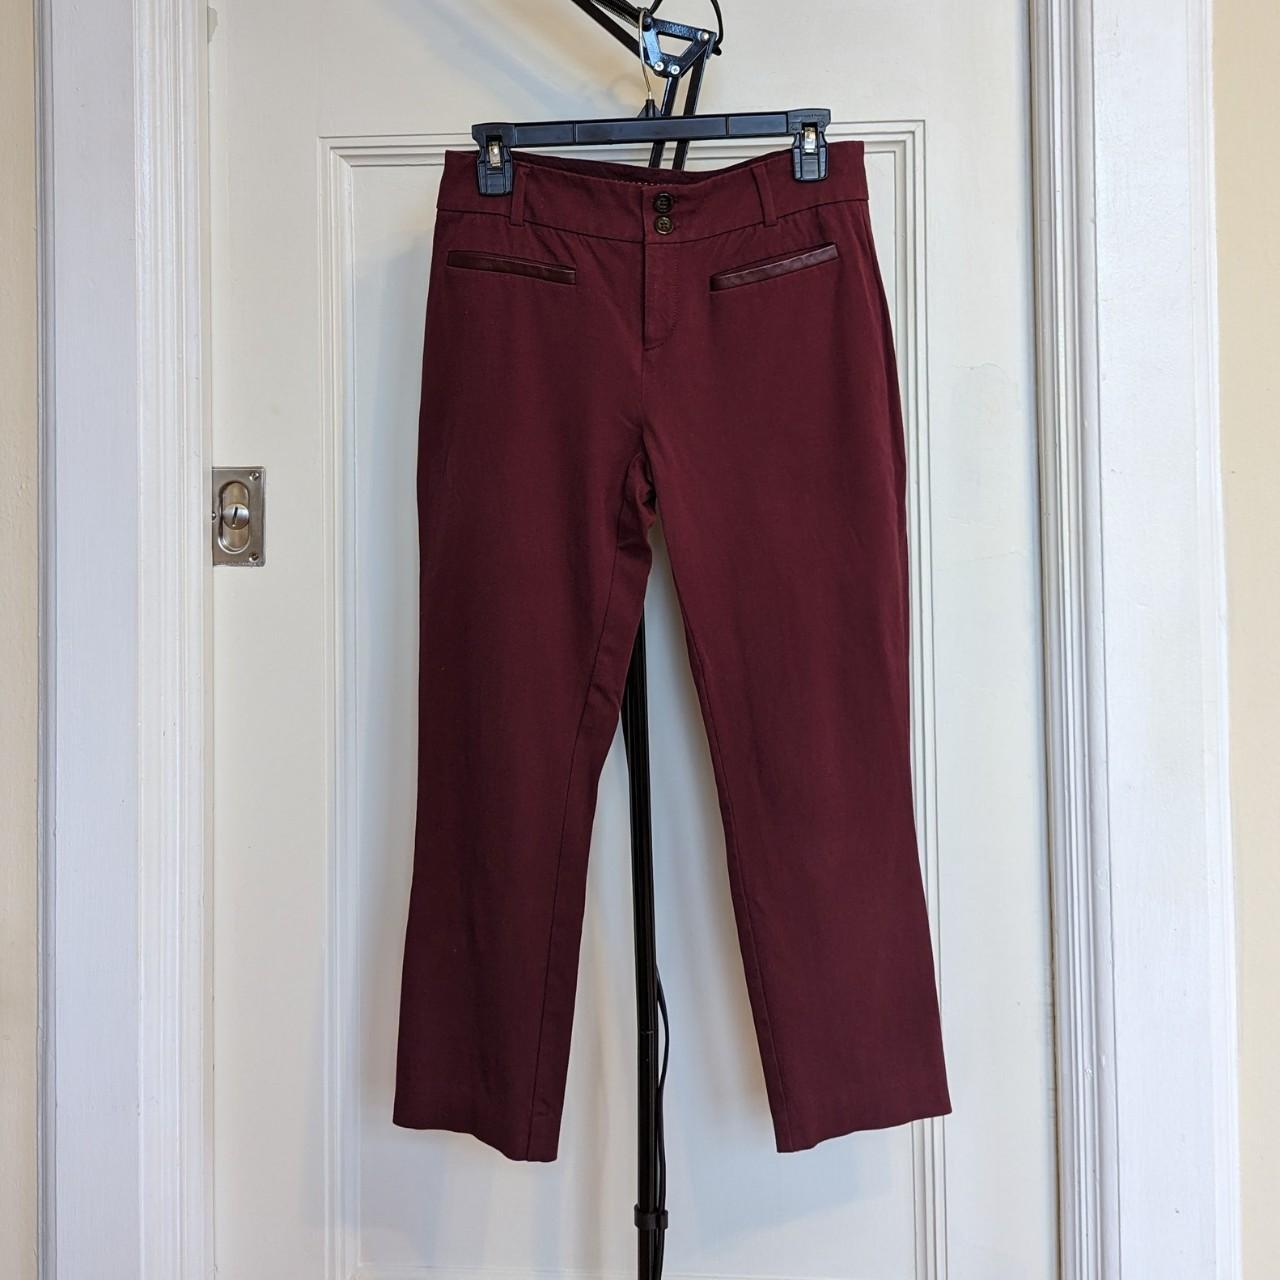 Elegant Solid Tapered/Carrot Burgundy Plus Size Pants (Women's) -  Walmart.com